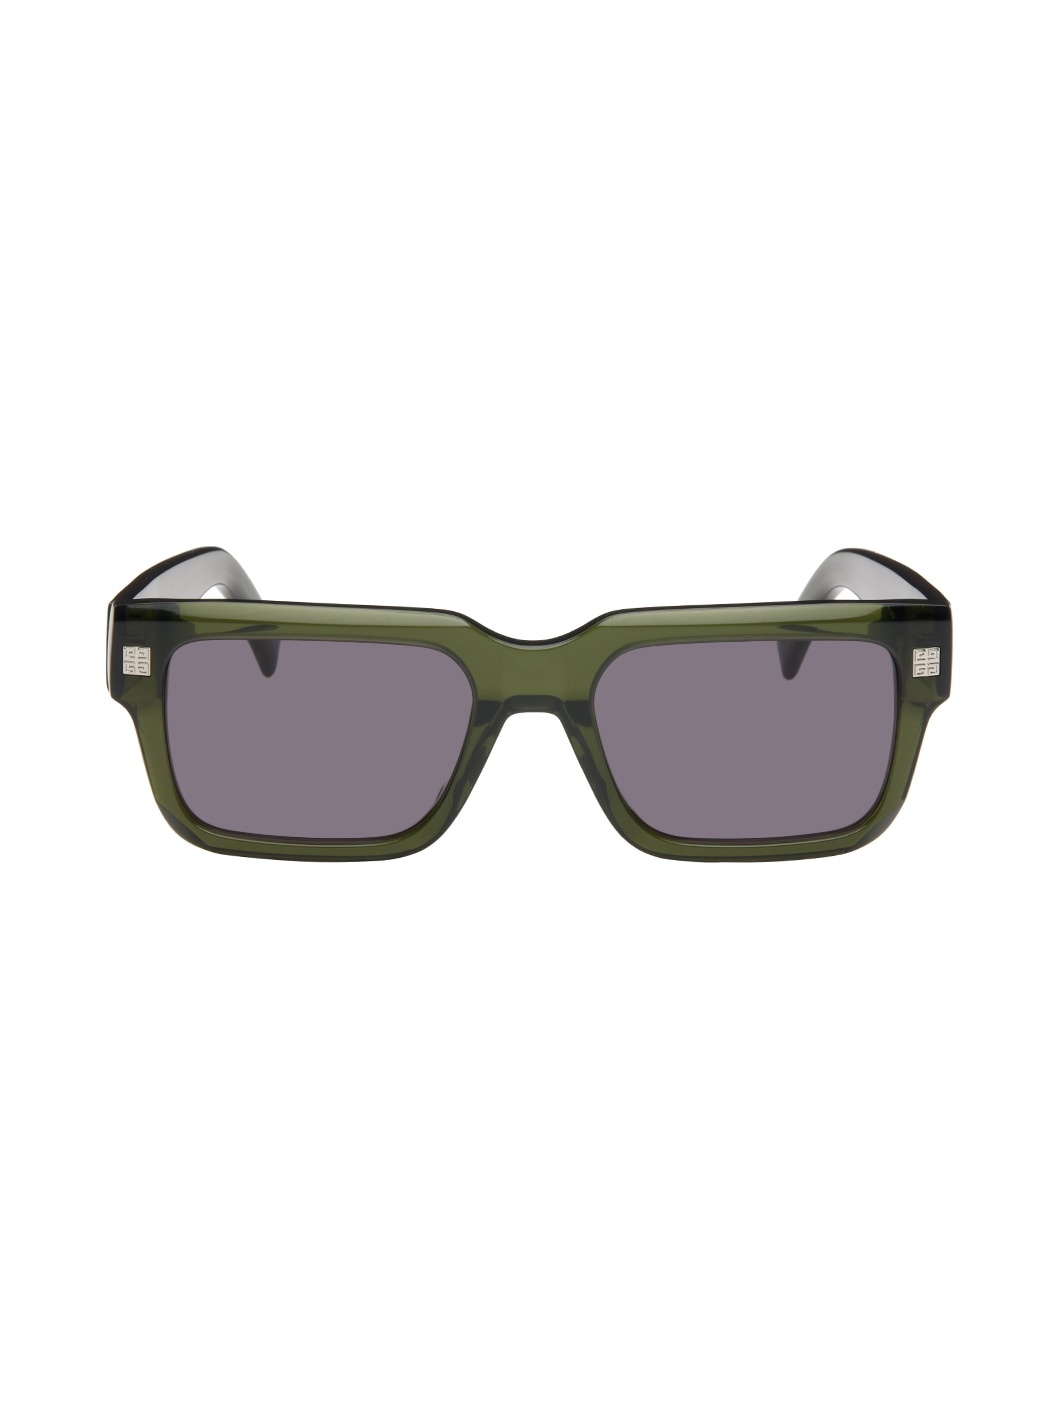 Green GV Day Sunglasses - 1